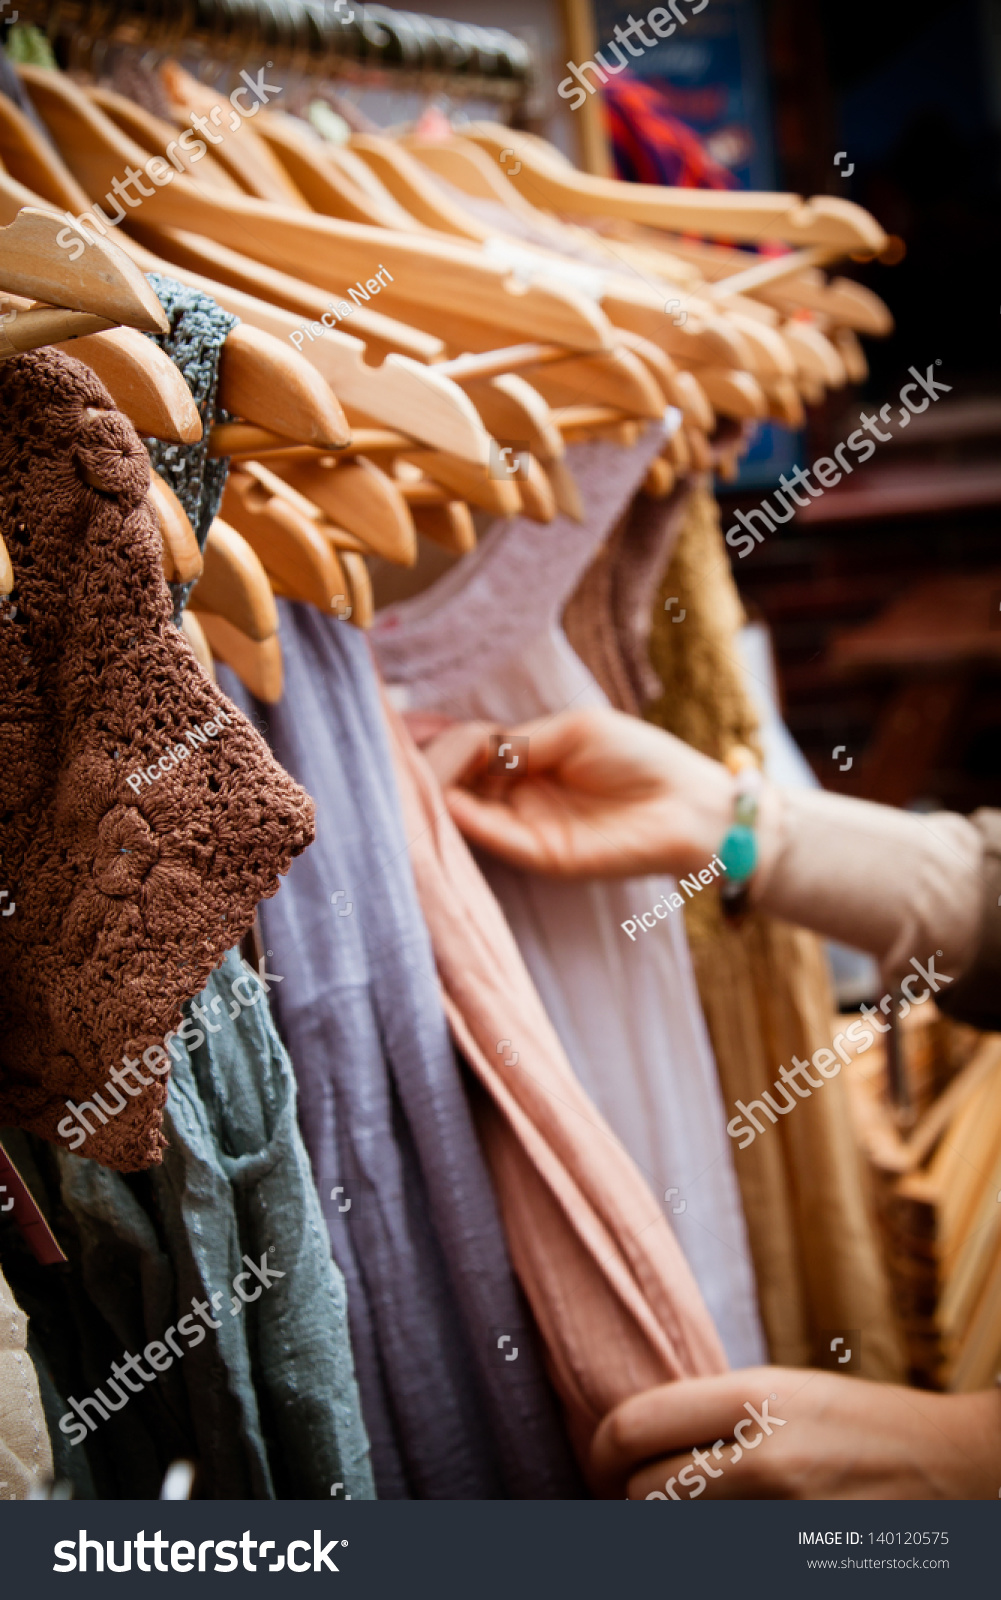 Recession bargains: rack of second-hand dresses for sale at market. Portrait orientation. #140120575